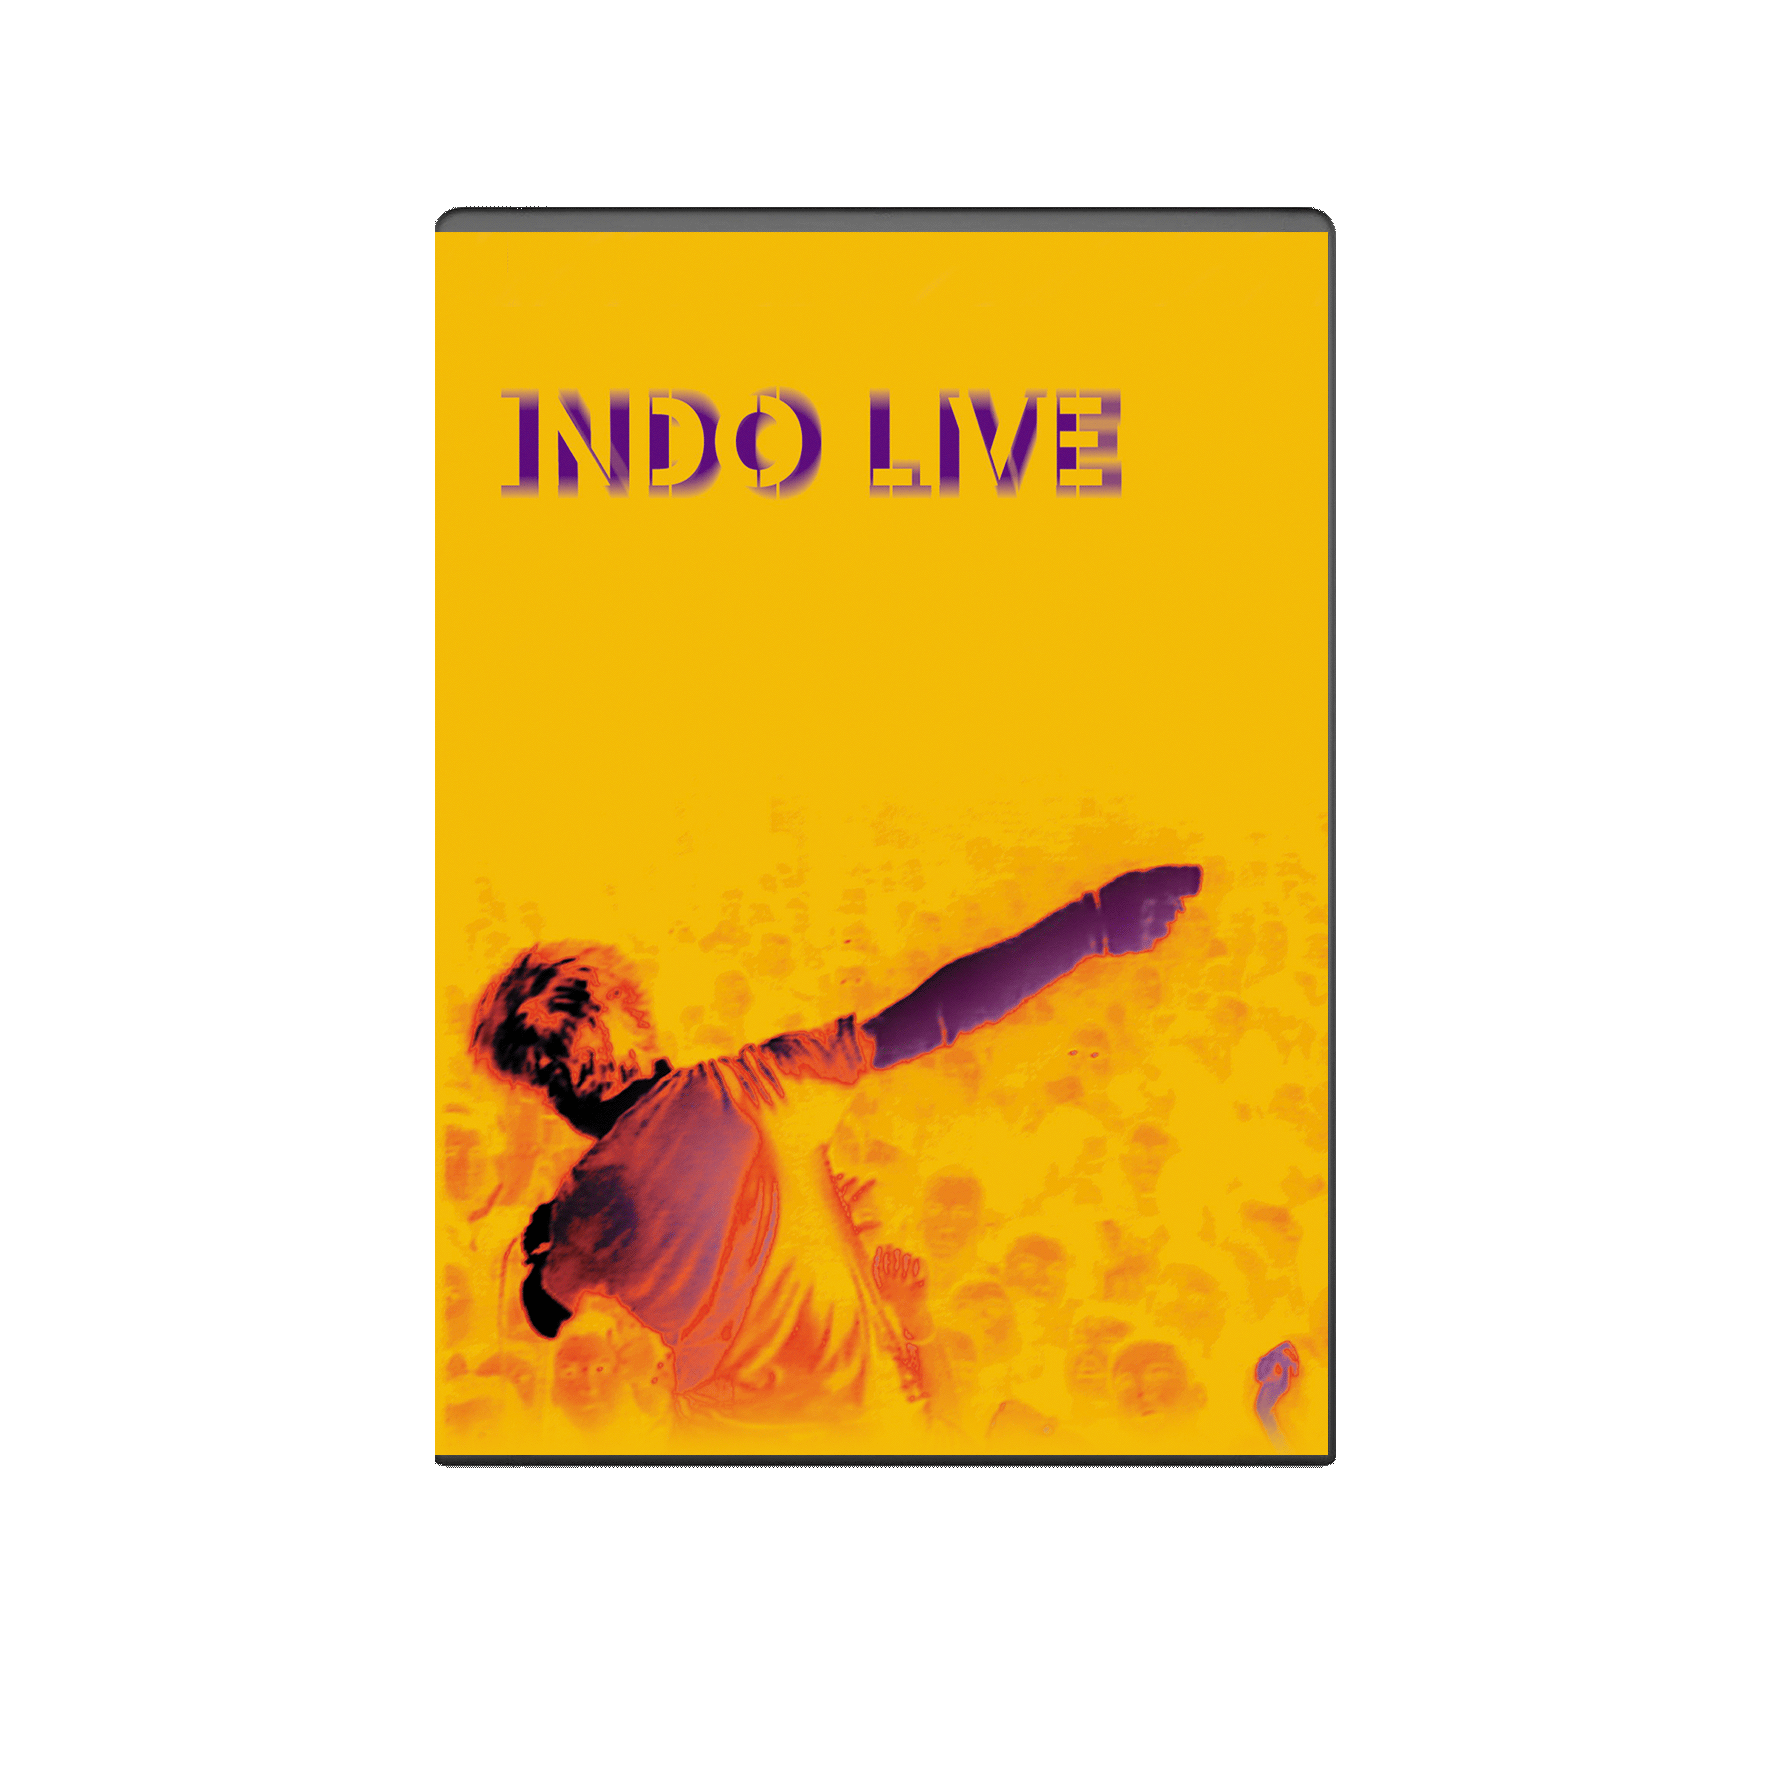 Indo Live (DVD, 1997)